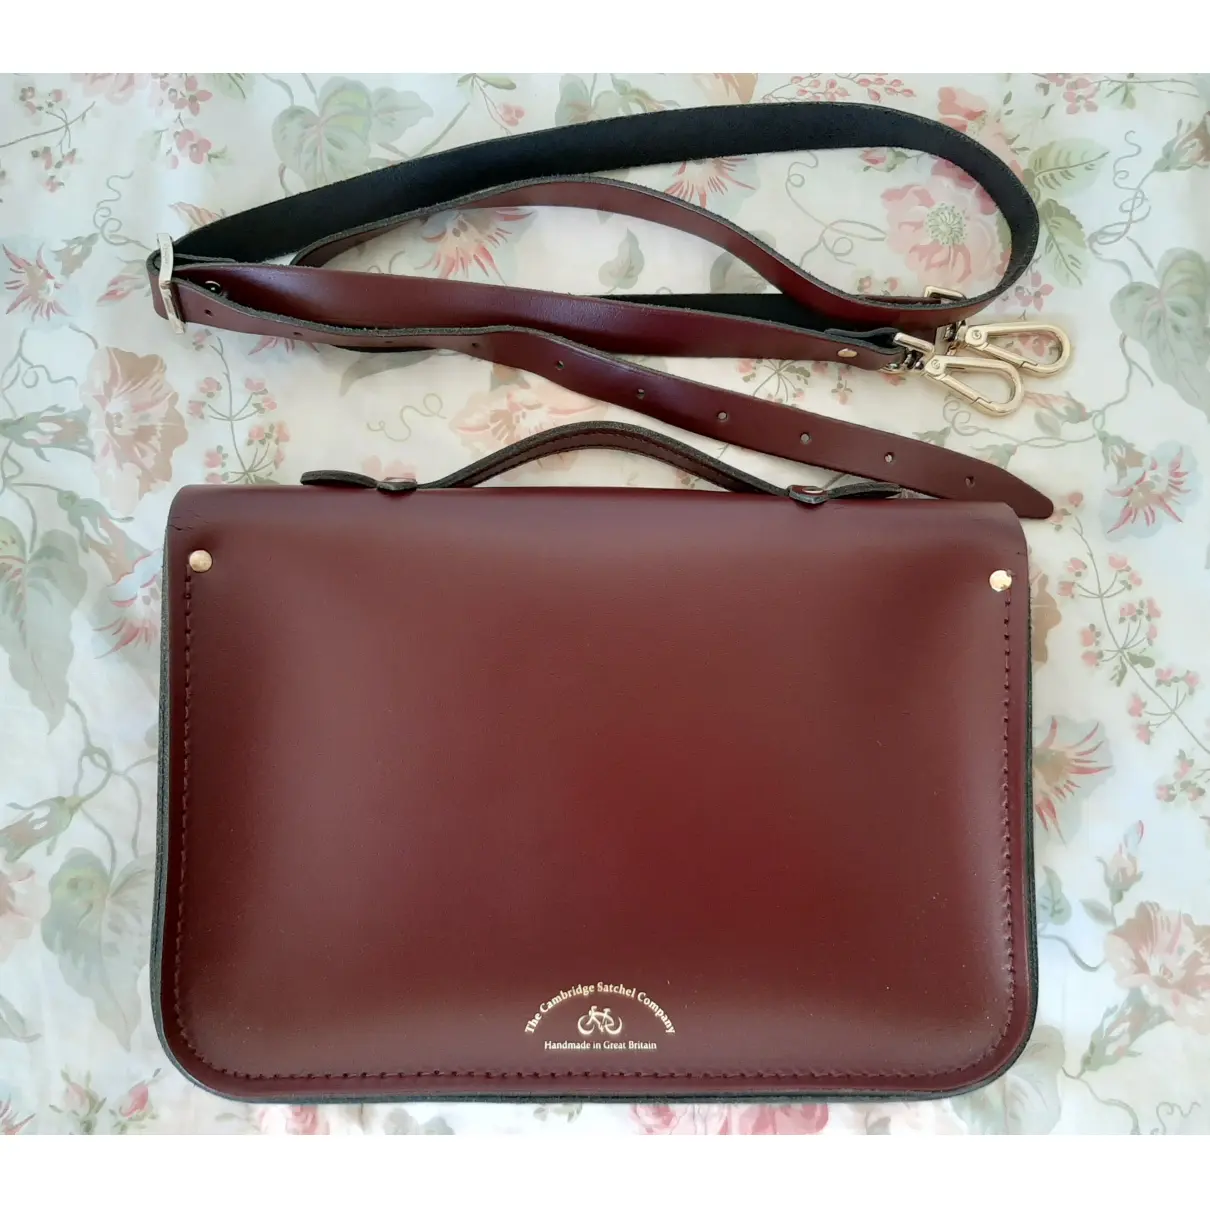 Buy Cambridge Satchel Company Leather handbag online